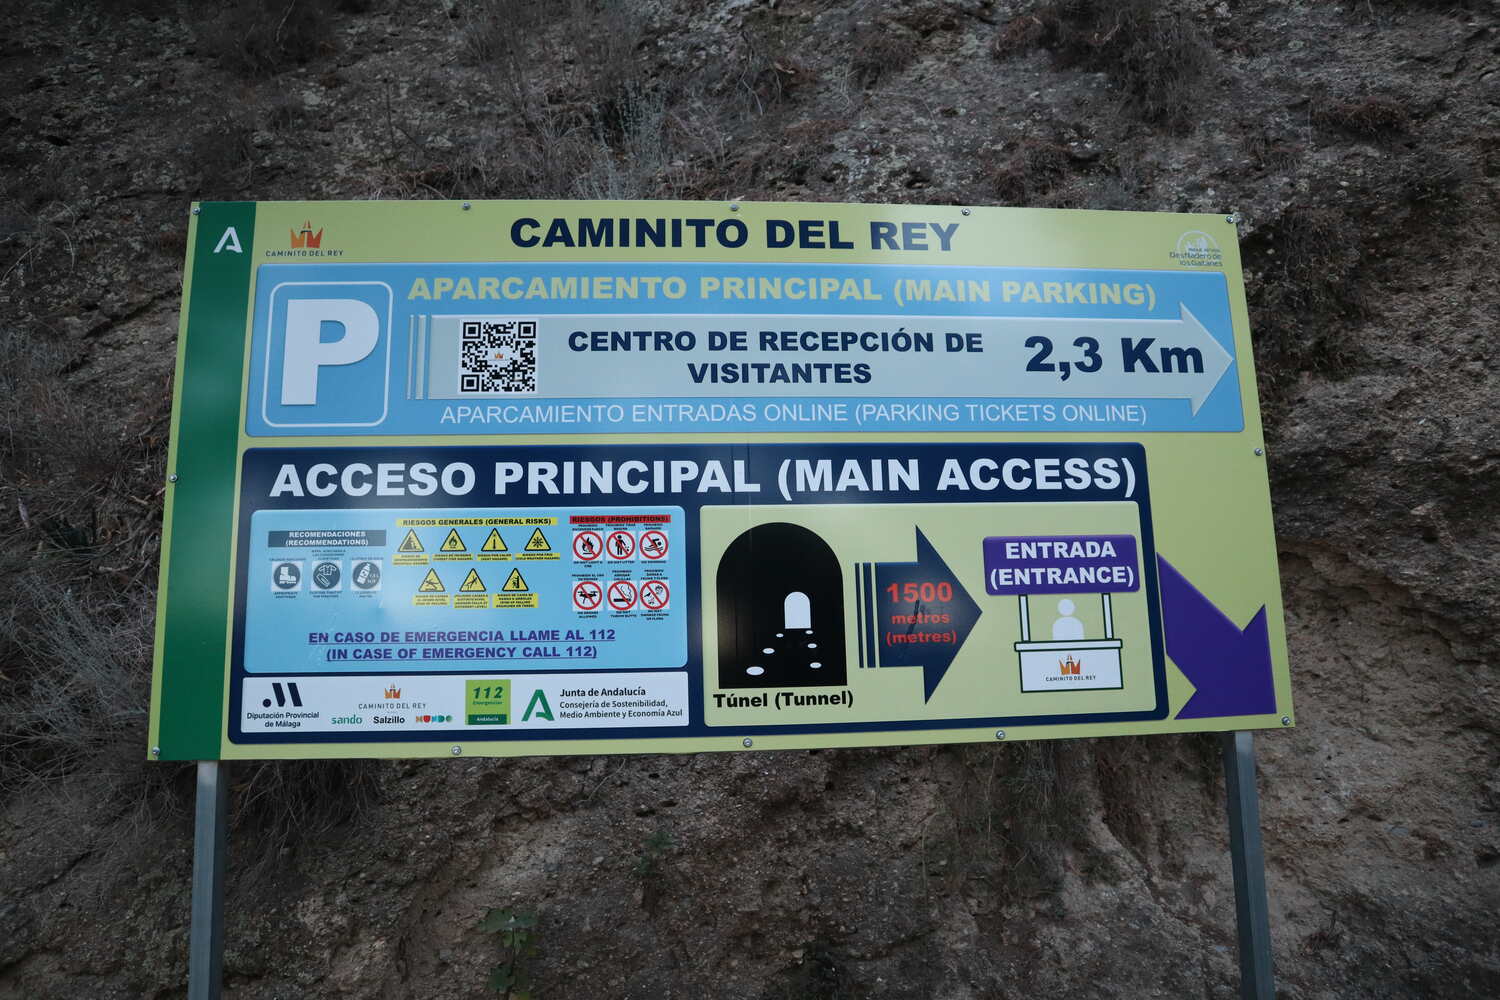 Indications near El Kiosko parking Caminito del rey - How to Get From Malaga to Caminito Del Rey